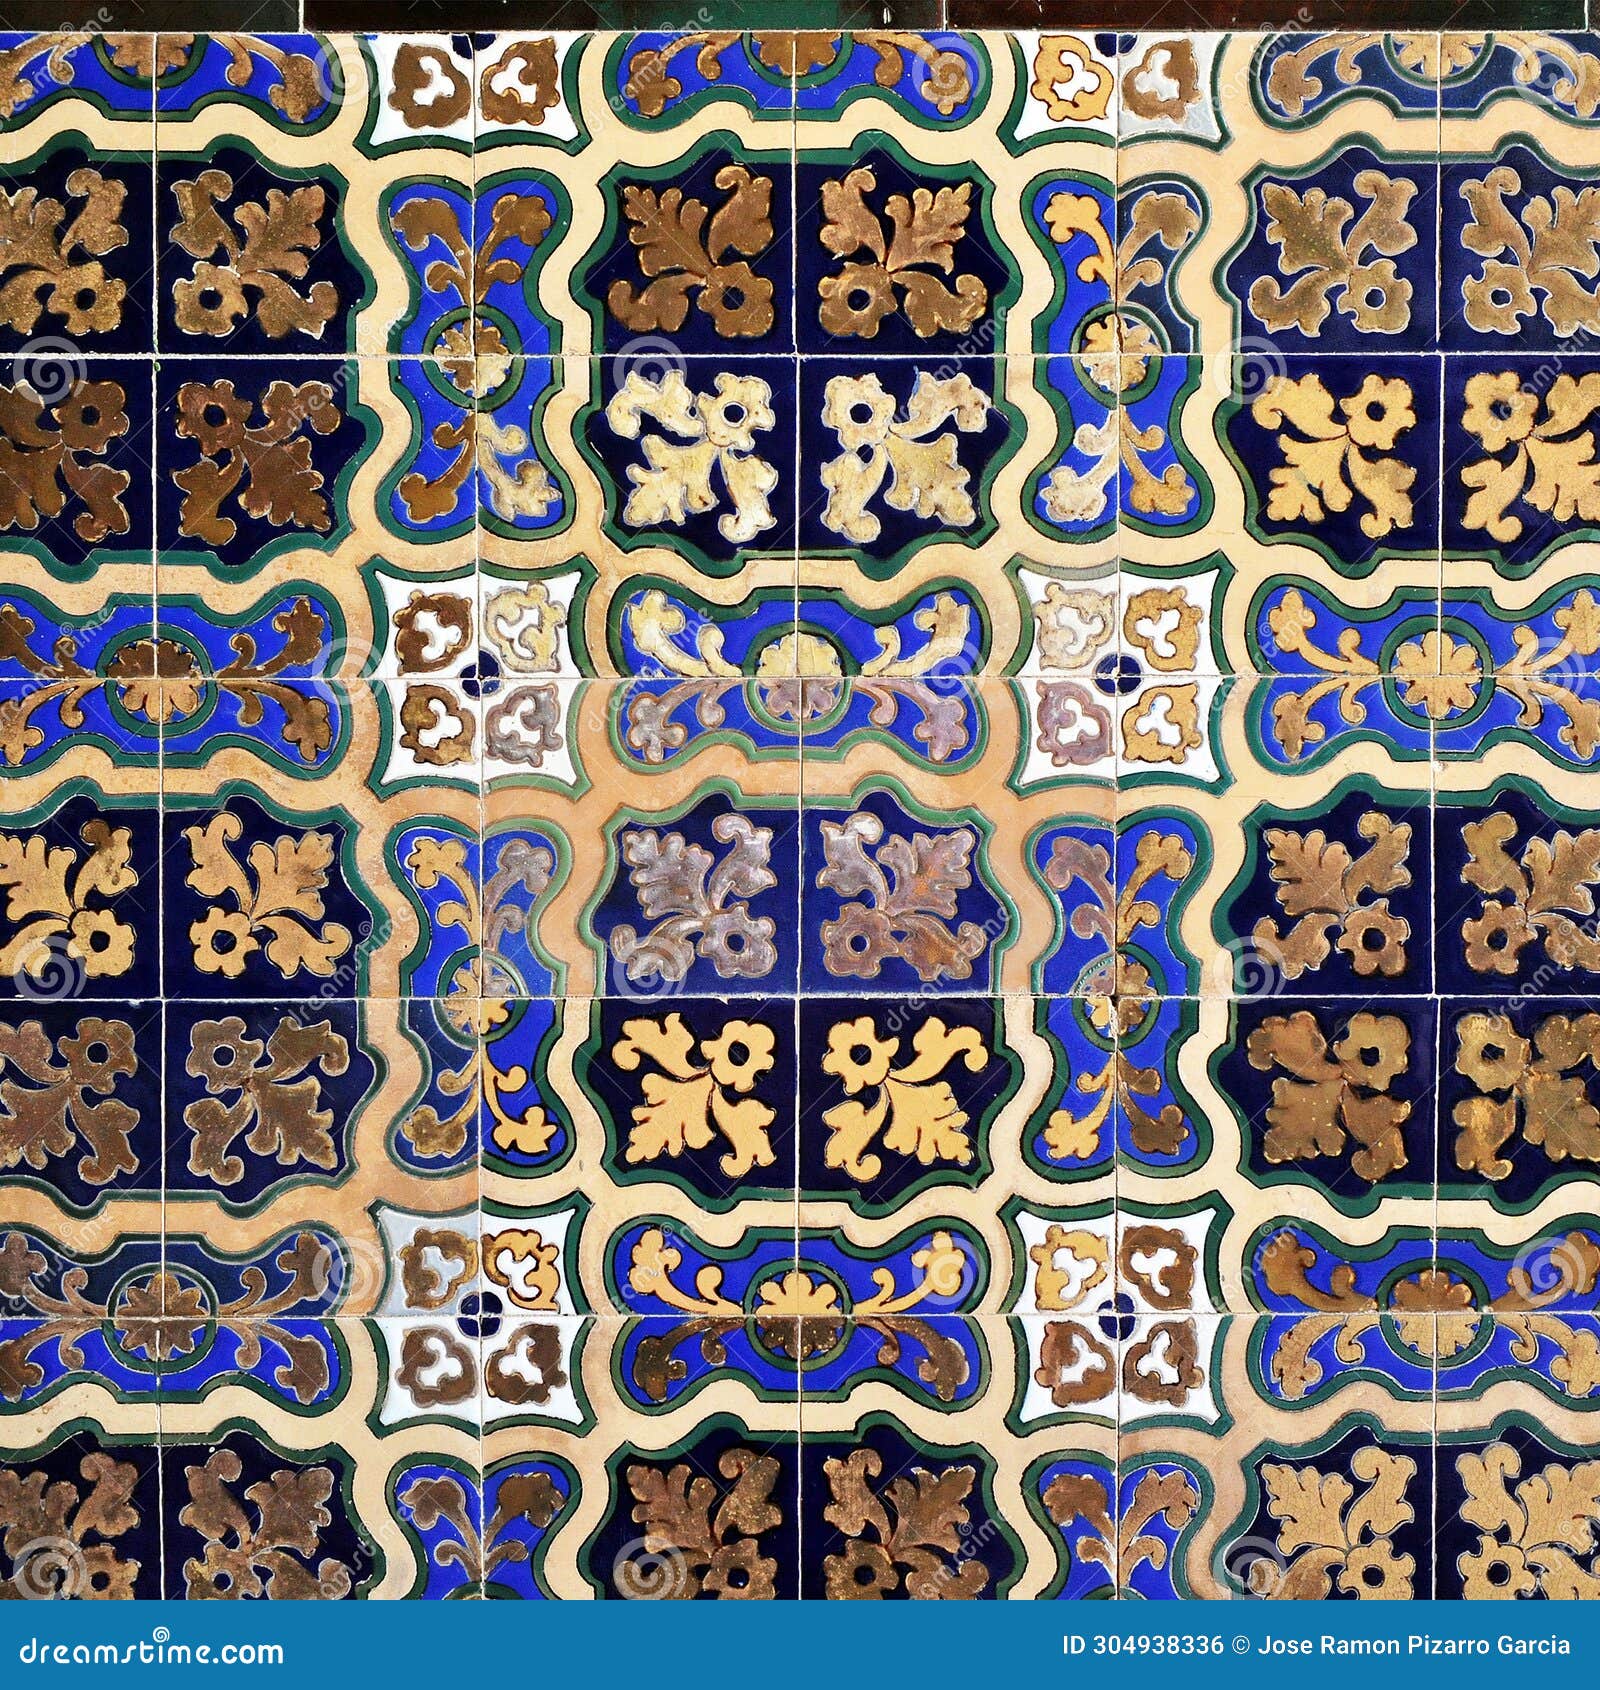 antique pattern tiles made in seville in moorish style. spanish azulejos. triana azulejos.